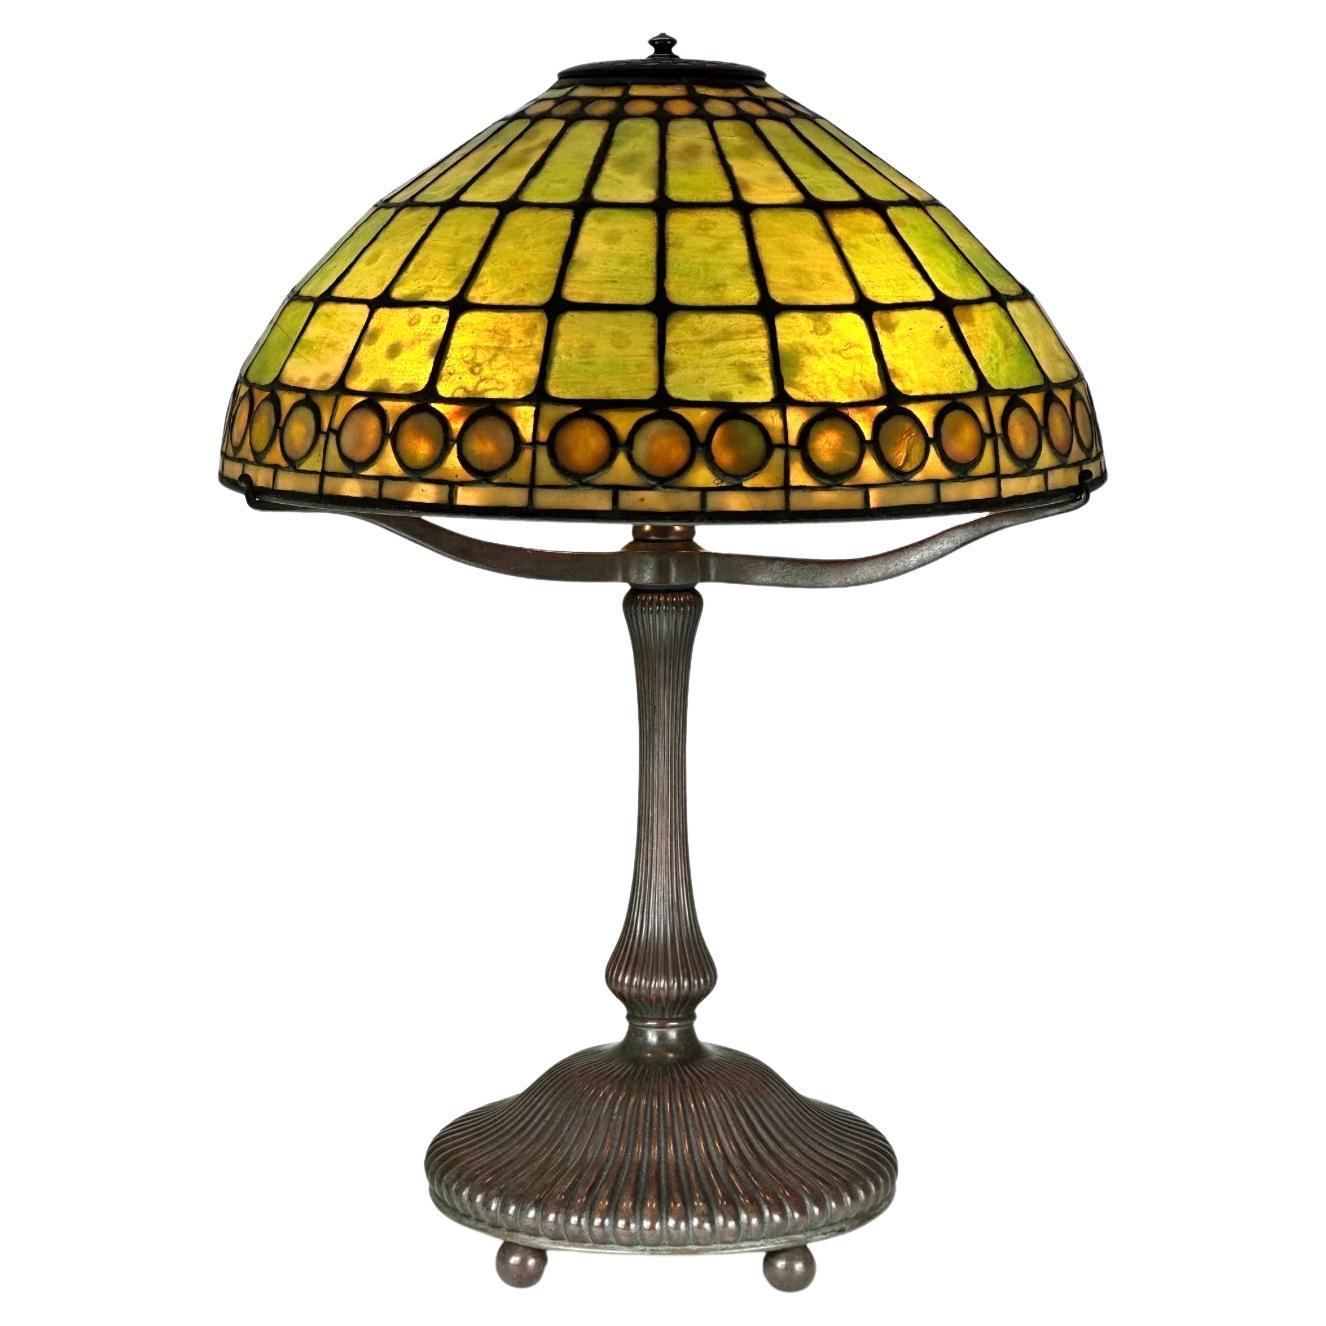 Tiffany Studios Jeweled Colonial lampe de table